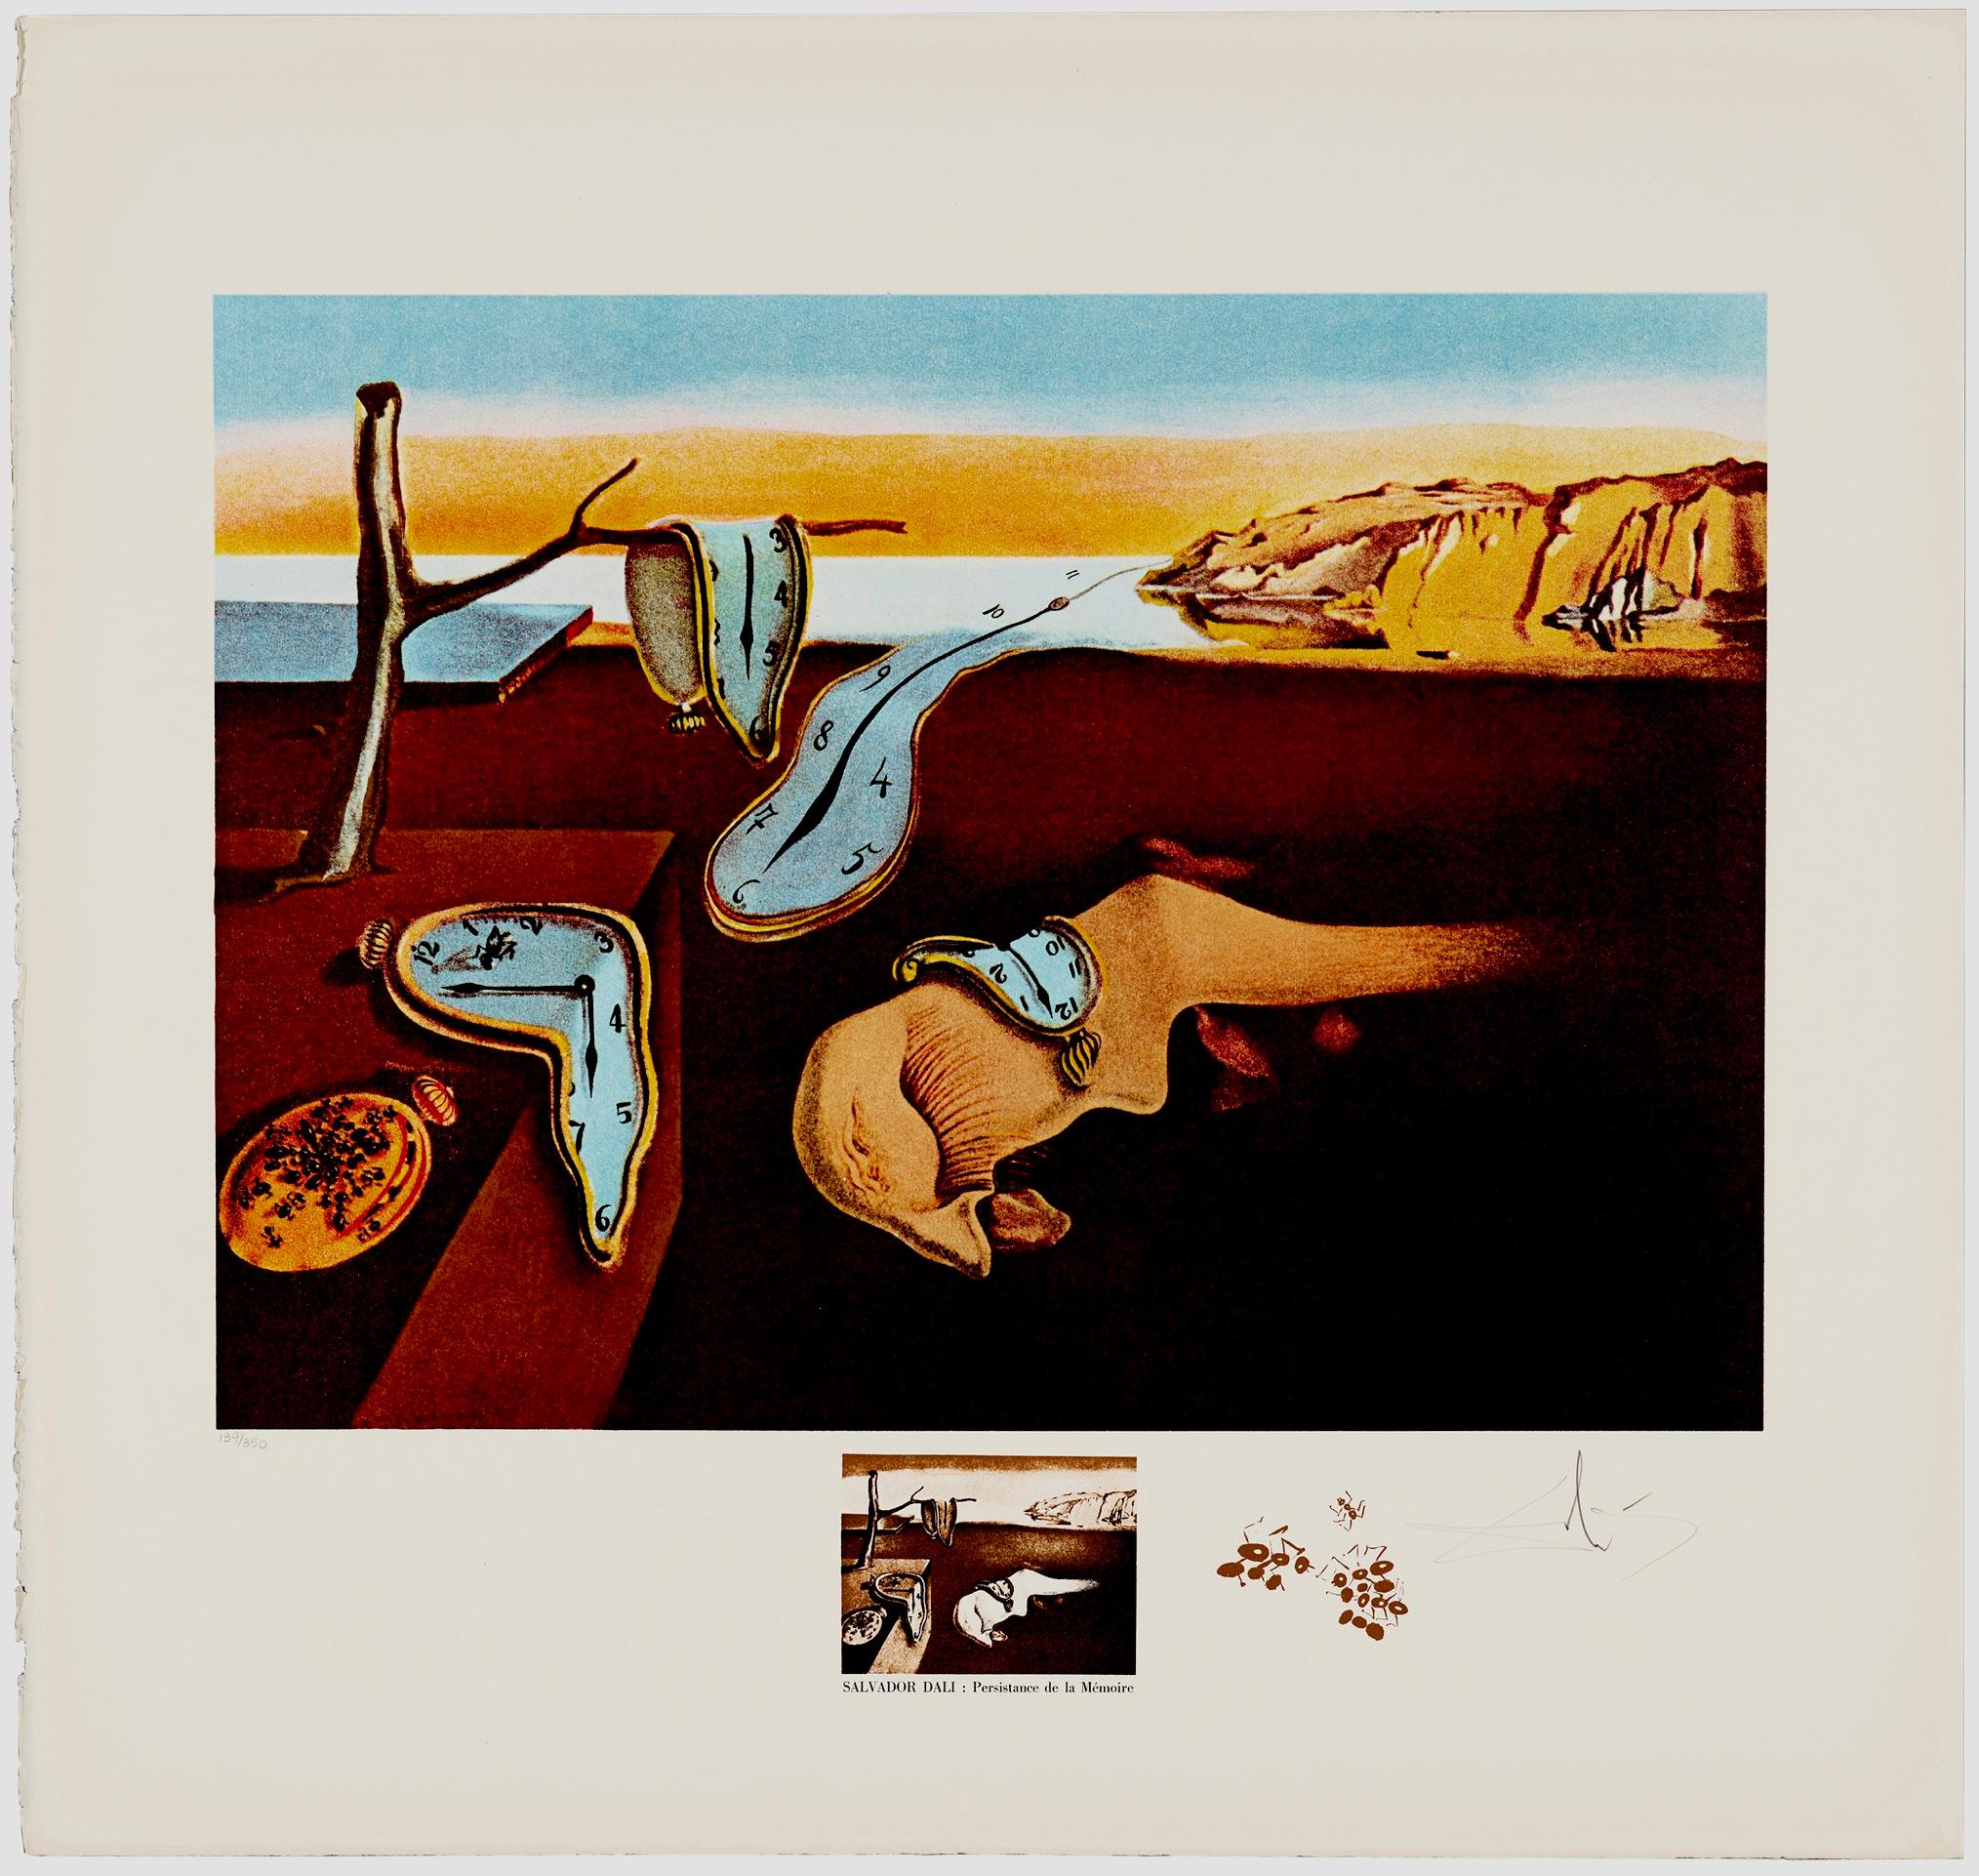 Neues in Great Masterpieces, komplette Suite – Print von Salvador Dalí